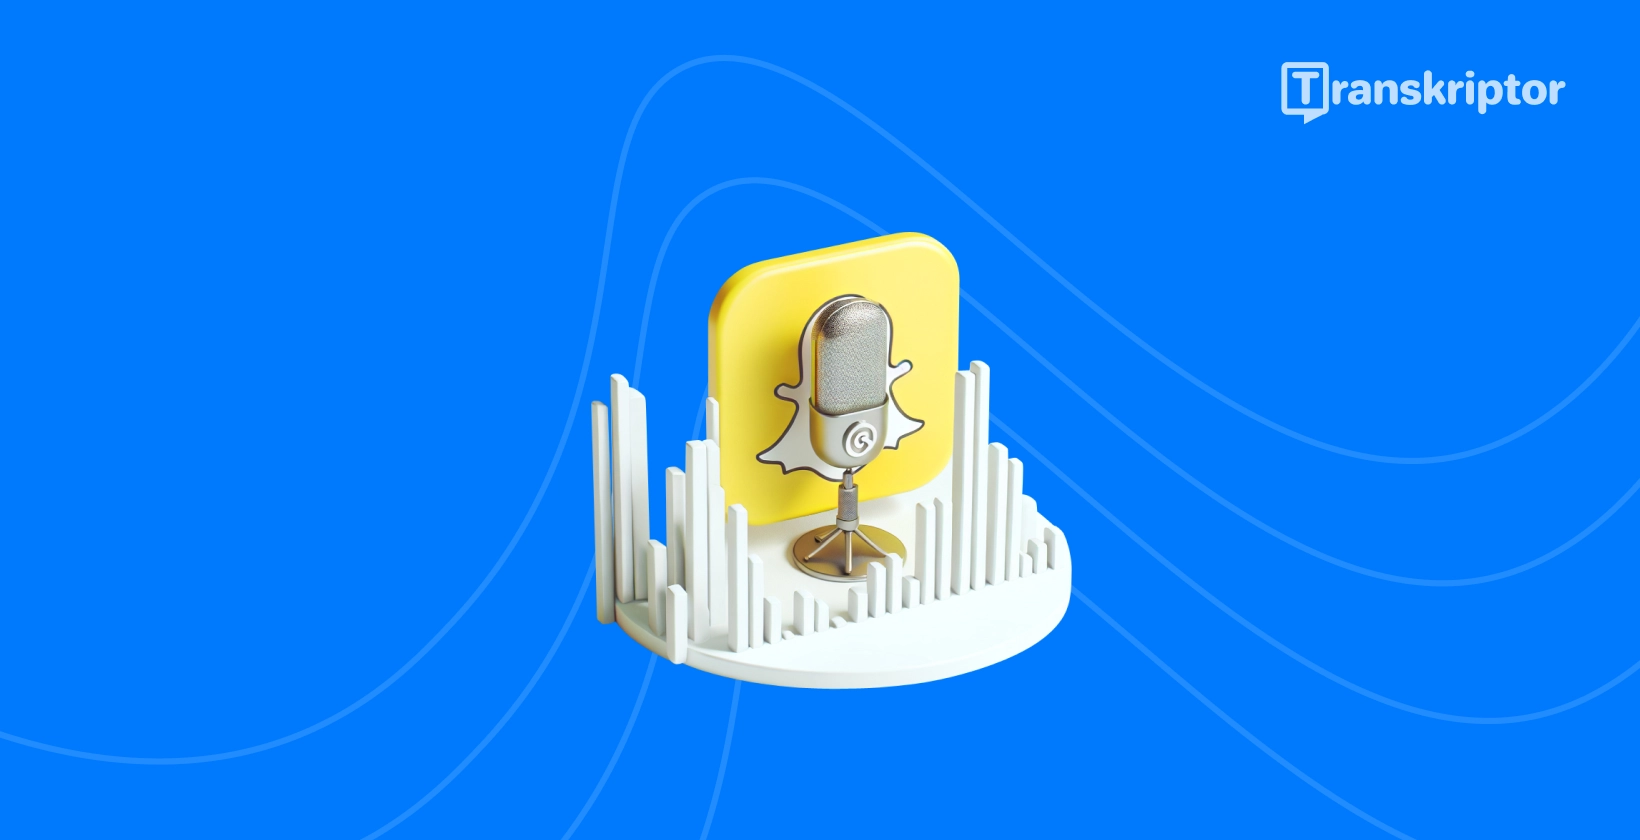 Snapchat εικονίδιο φάντασμα και μικρόφωνο που συμβολίζει τον οδηγό μεταγραφής ήχου από Transkriptor.